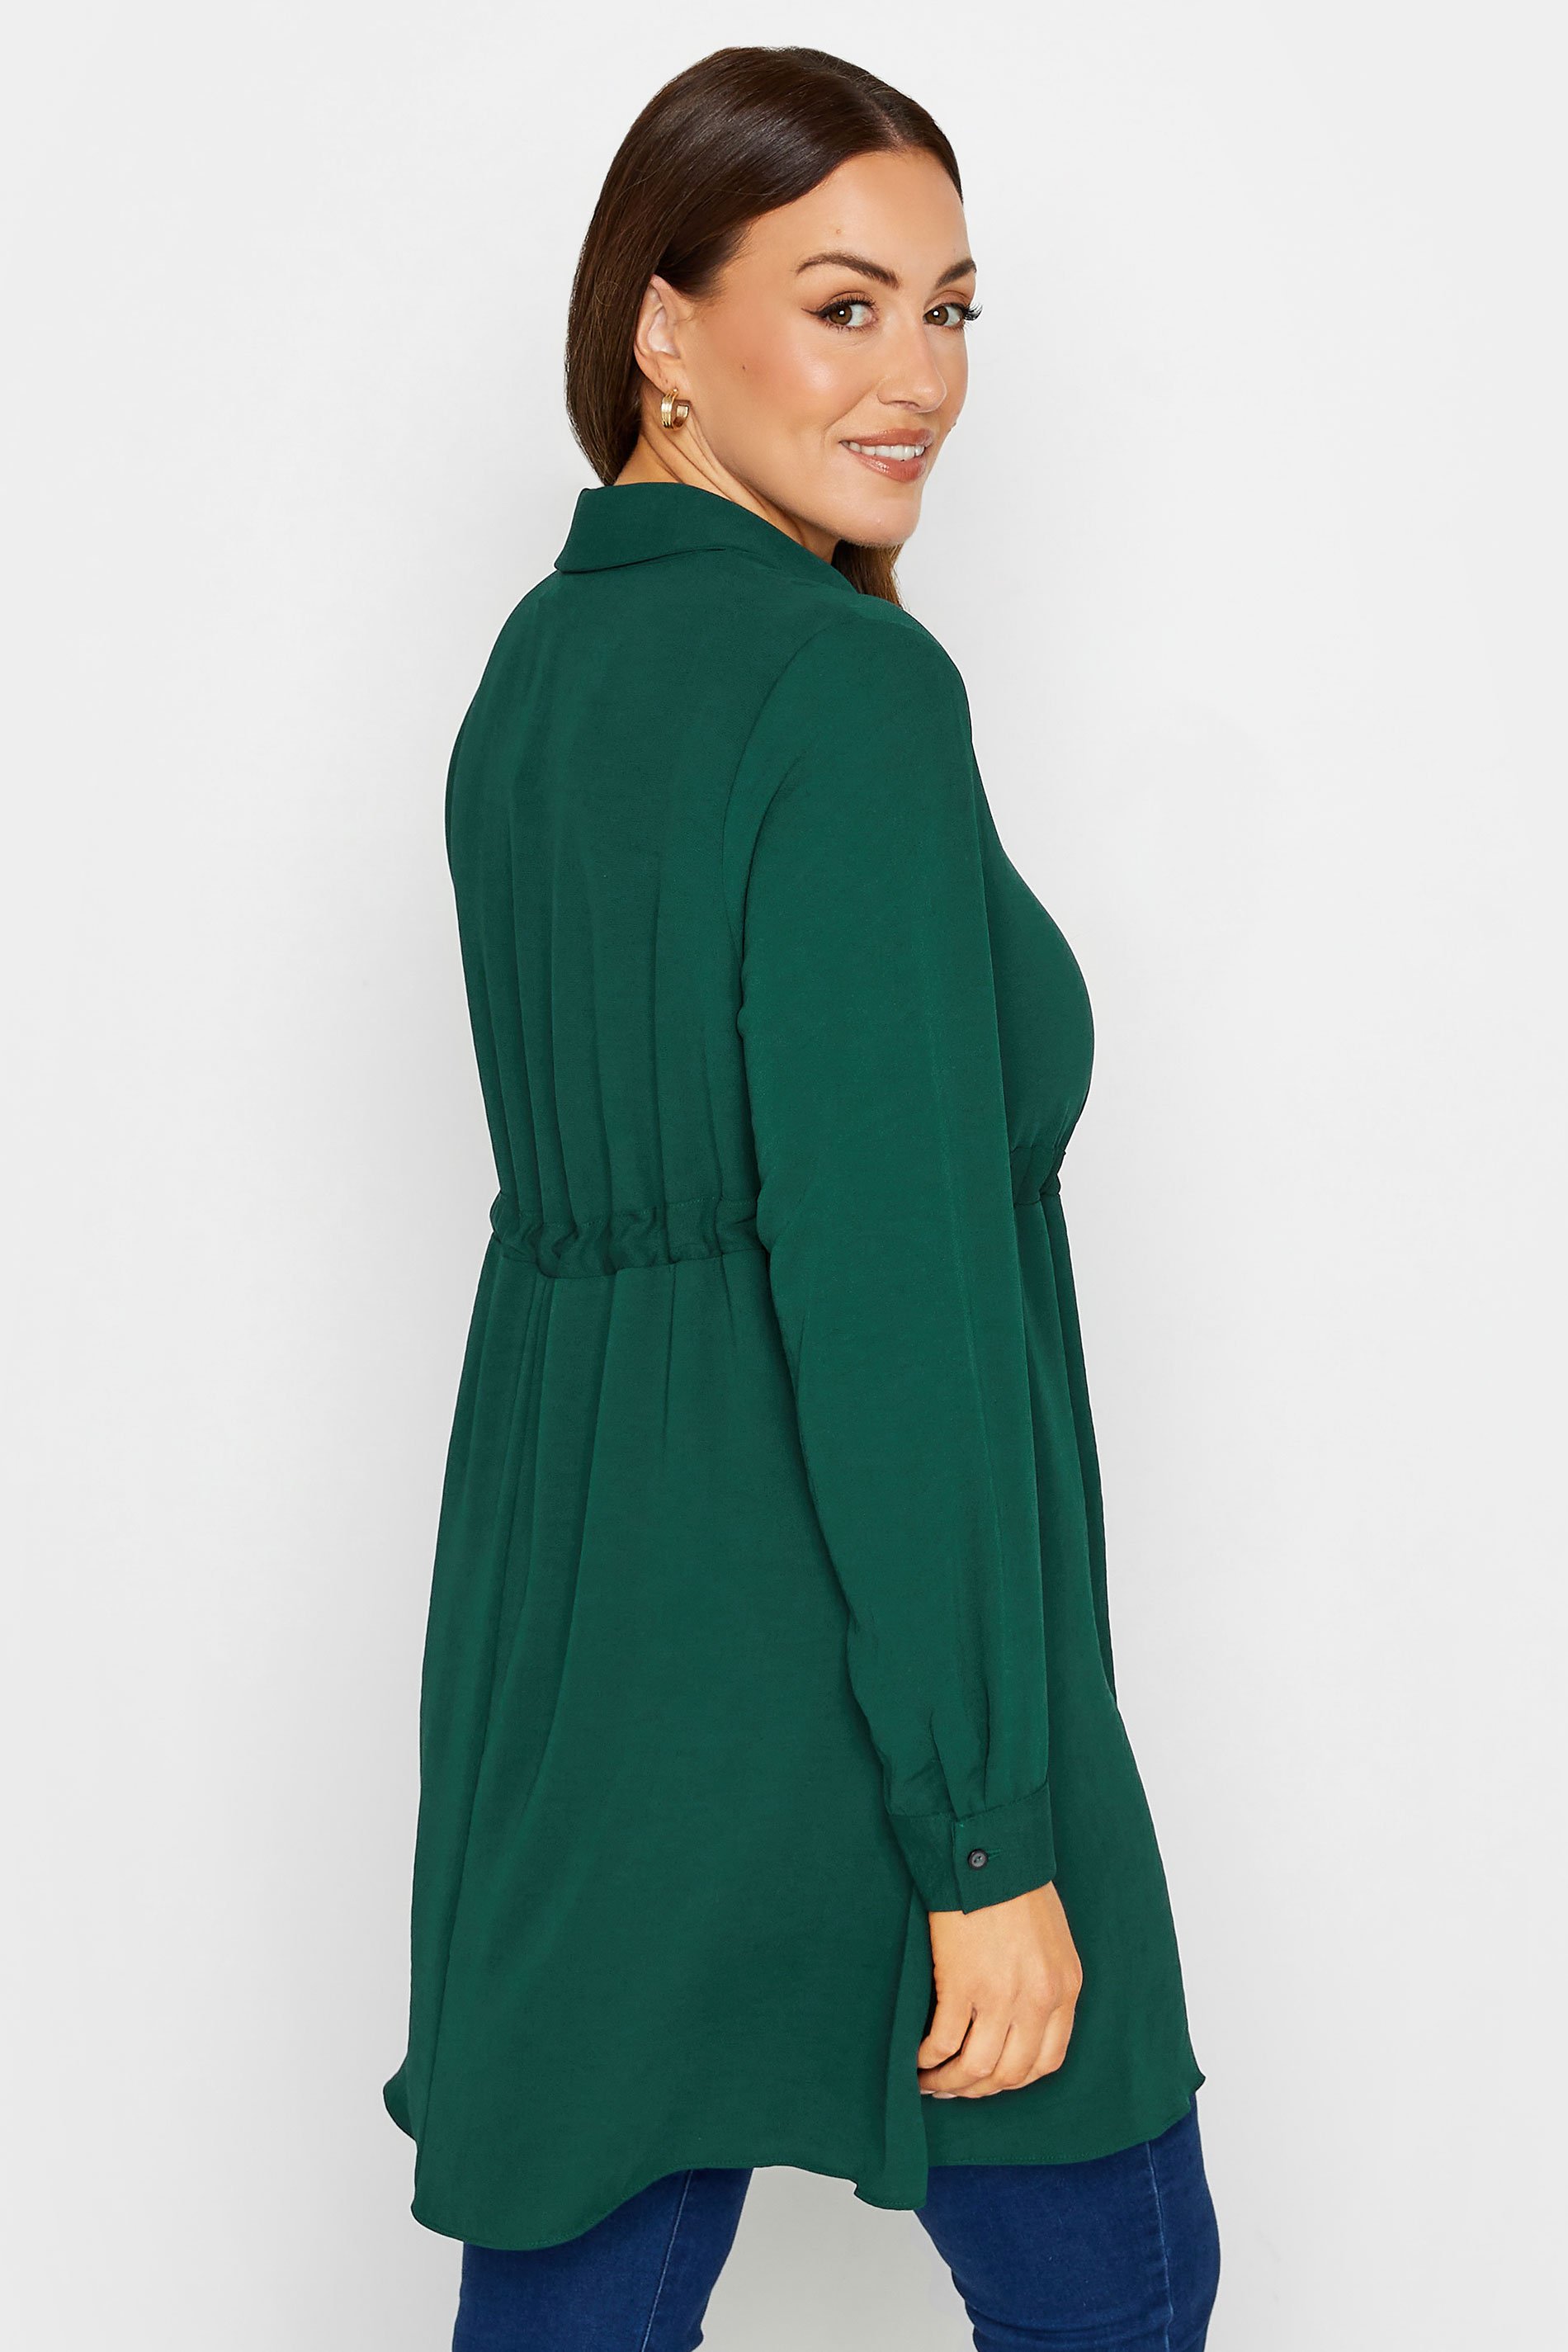 M&Co Emerald Green Tie Waist Tunic Shirt | M&Co 3